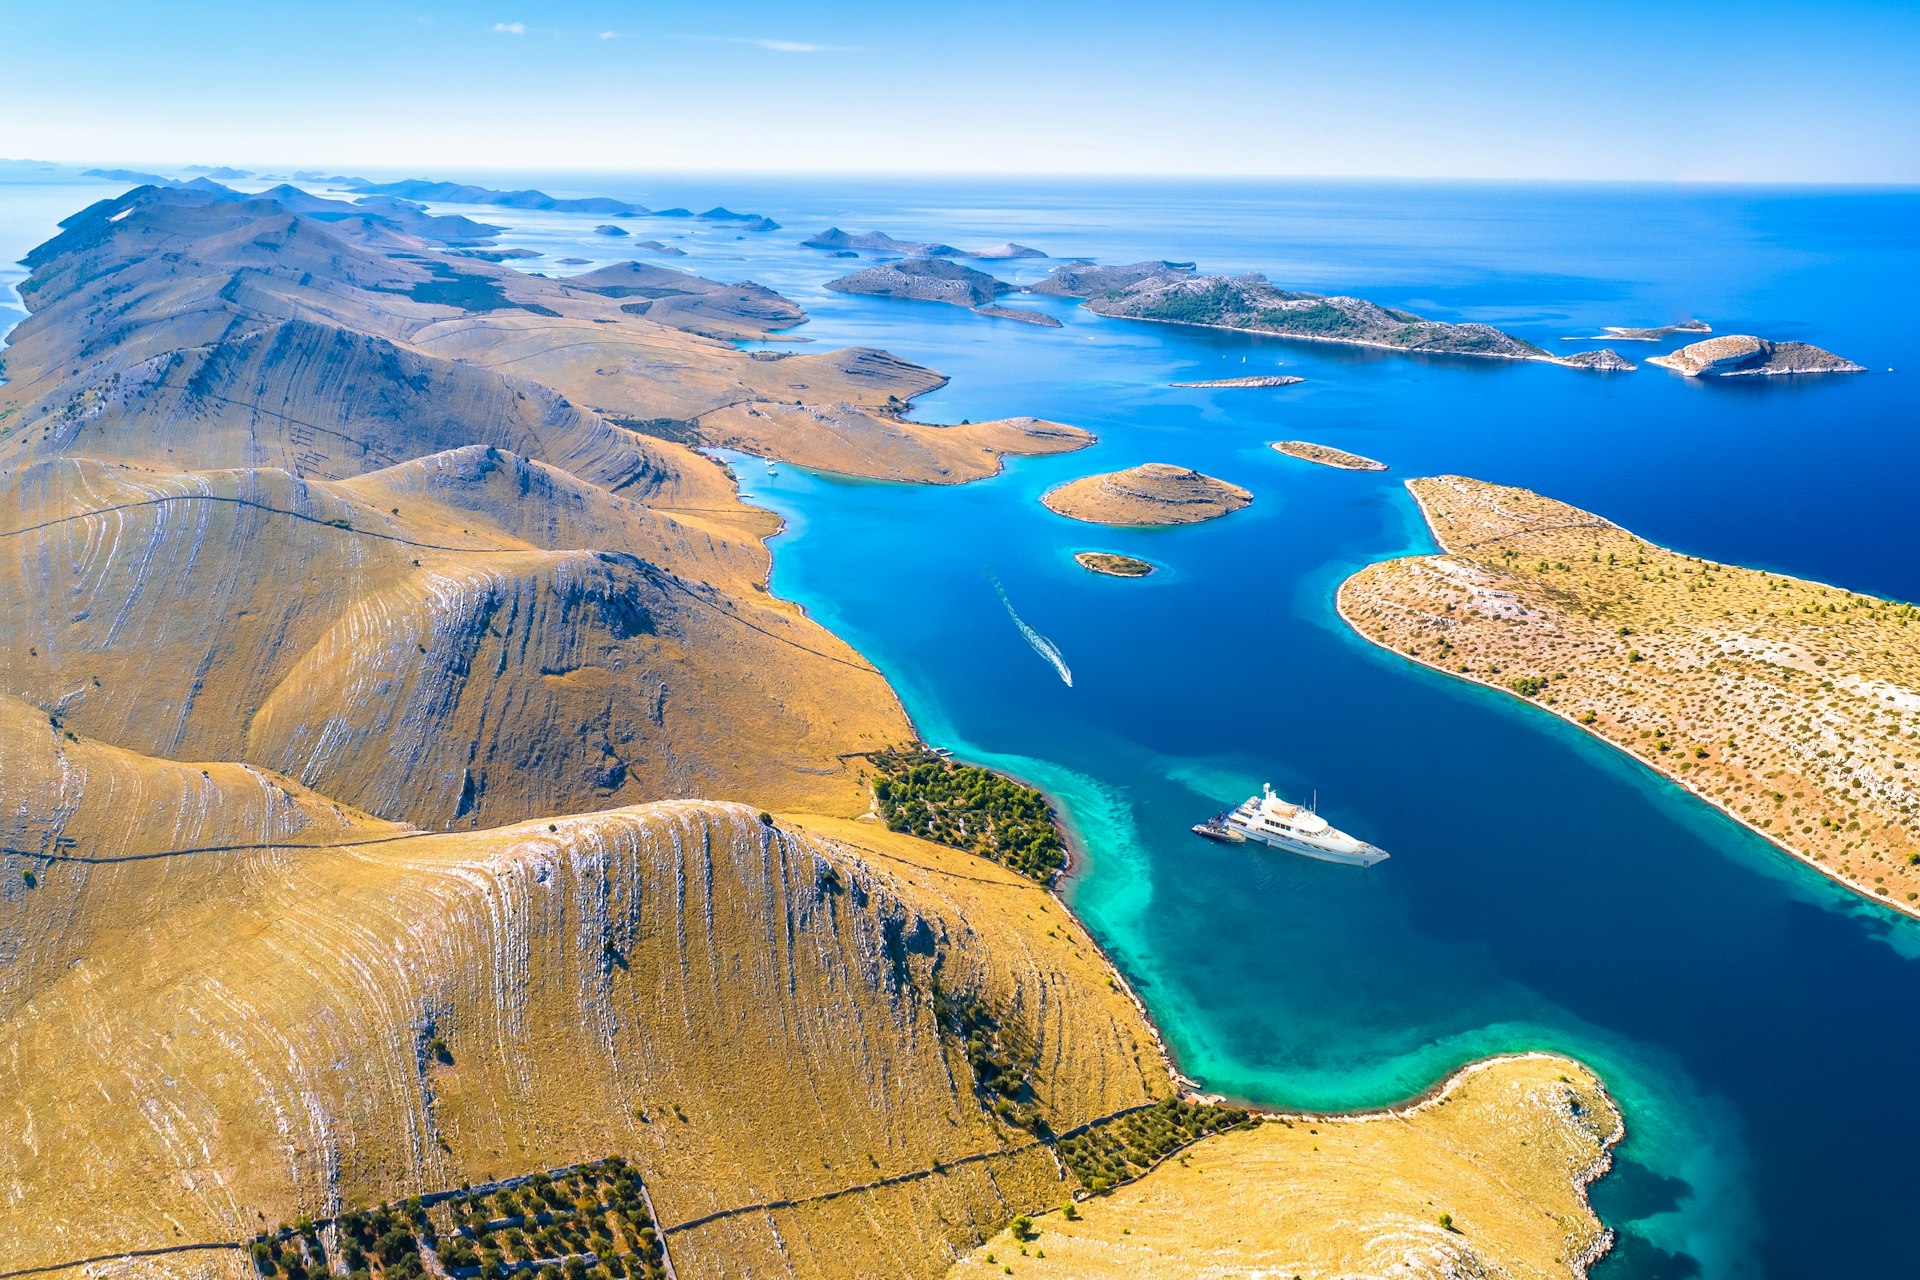 Kornati Islands national park archipelago shown in a spectacular coastline aerial view. 